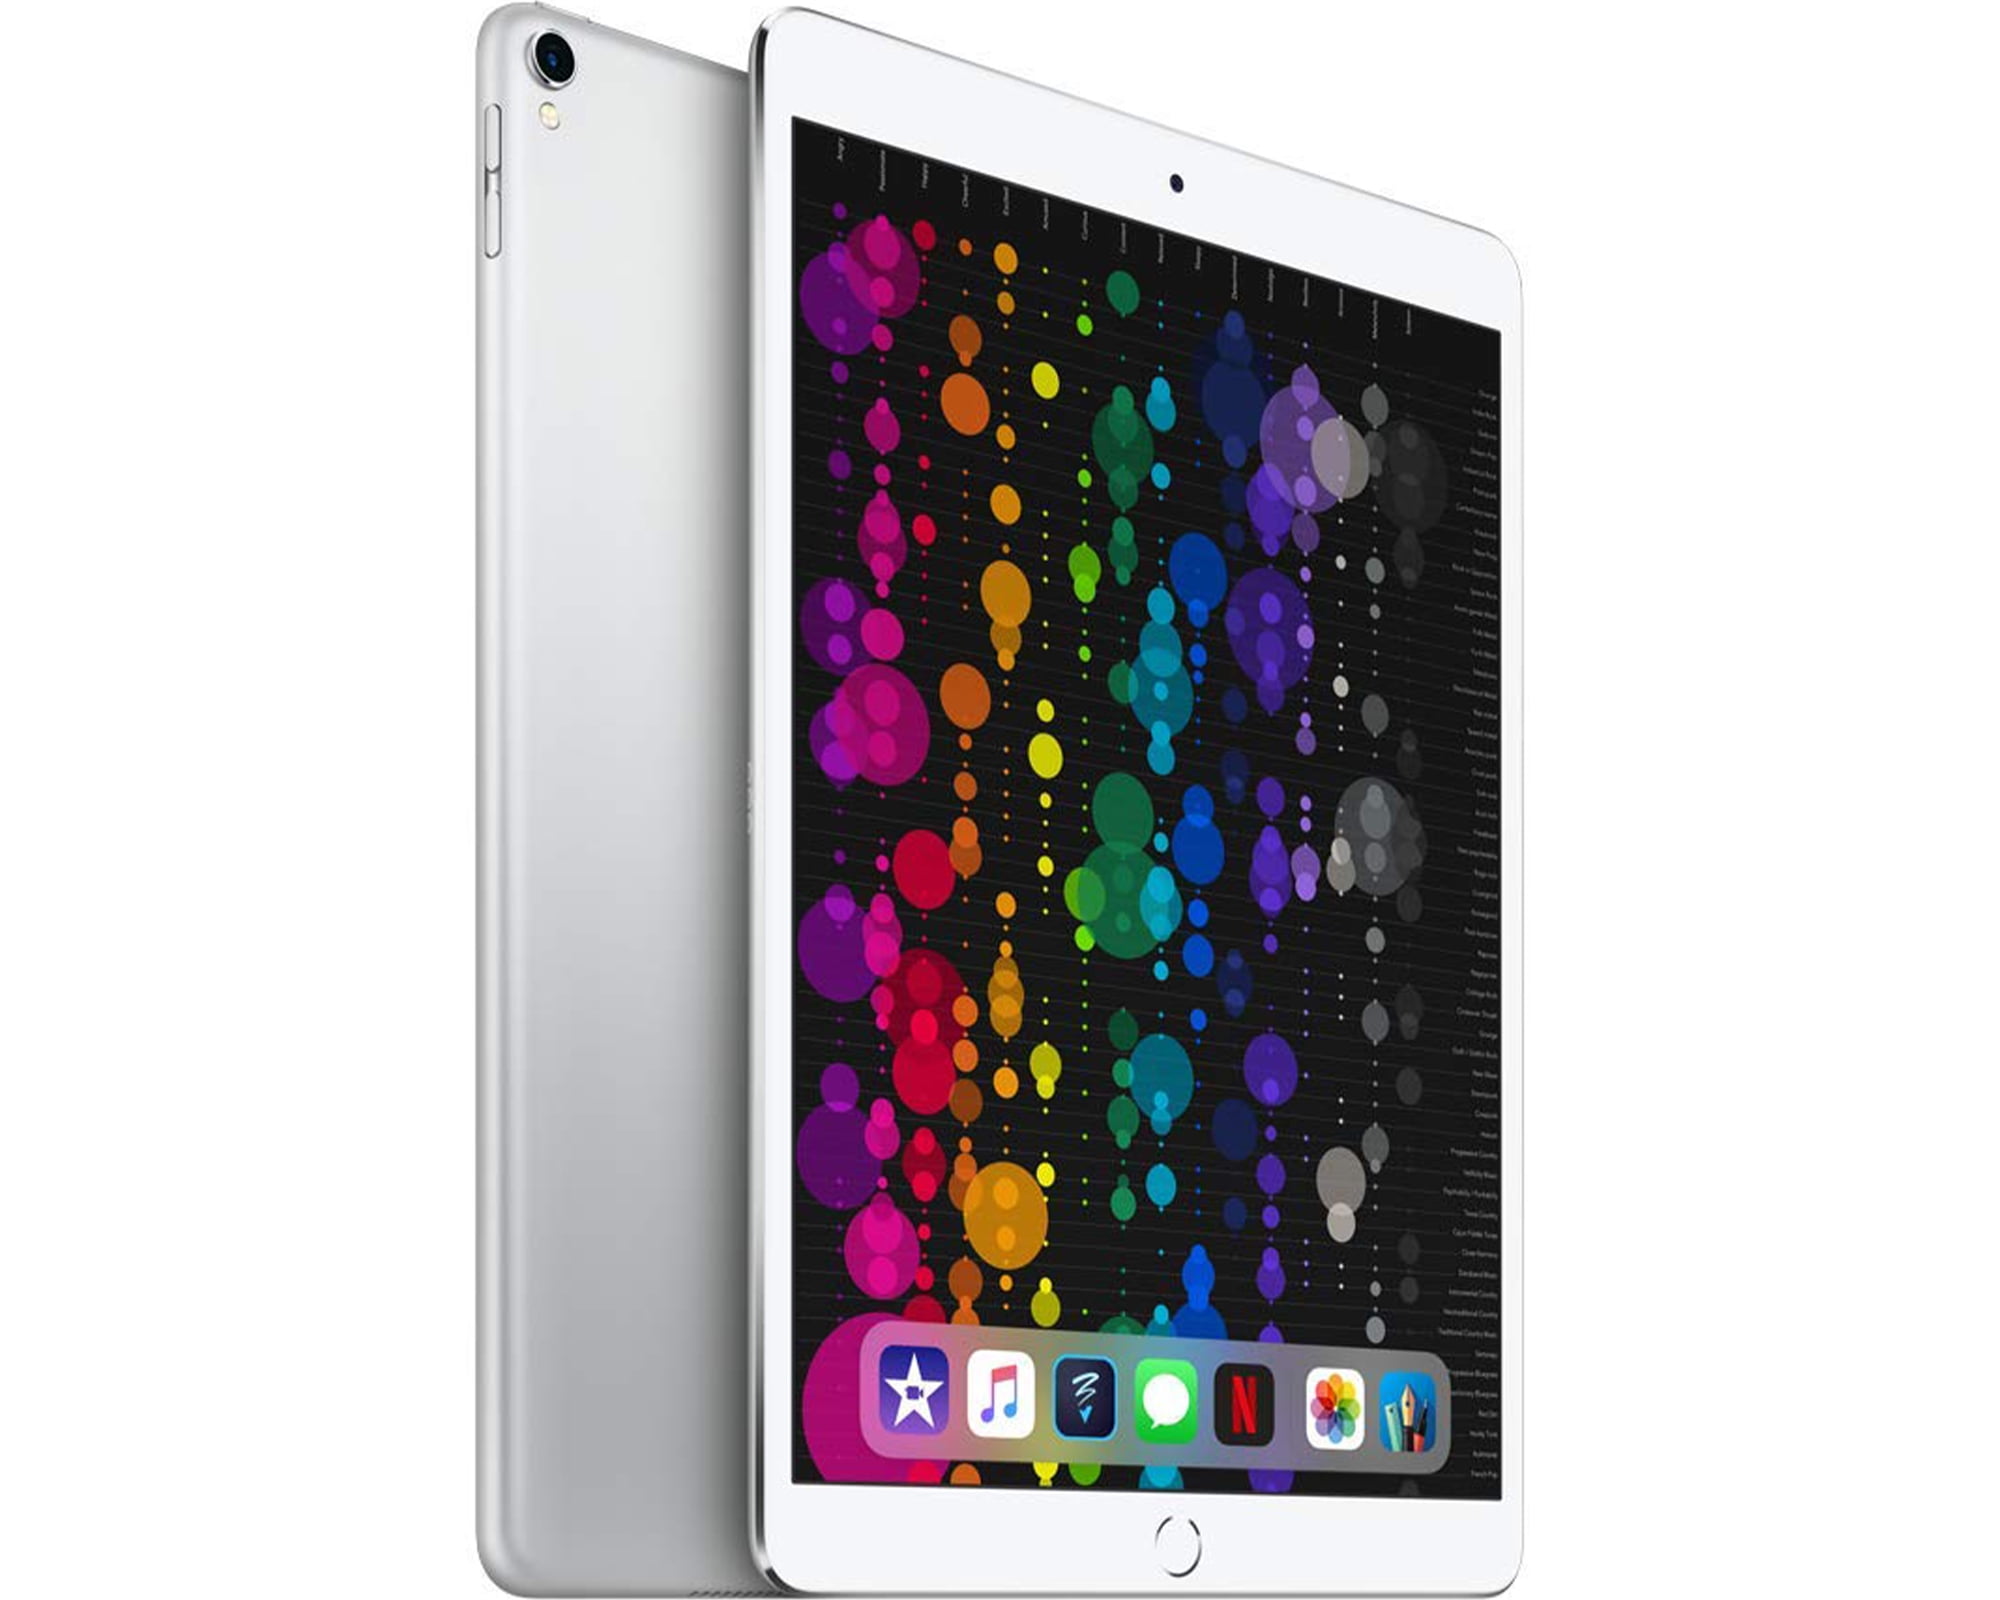 Apple iPad Pro | 10.5-inch Retina Display | 256GB | Wi-Fi Only 